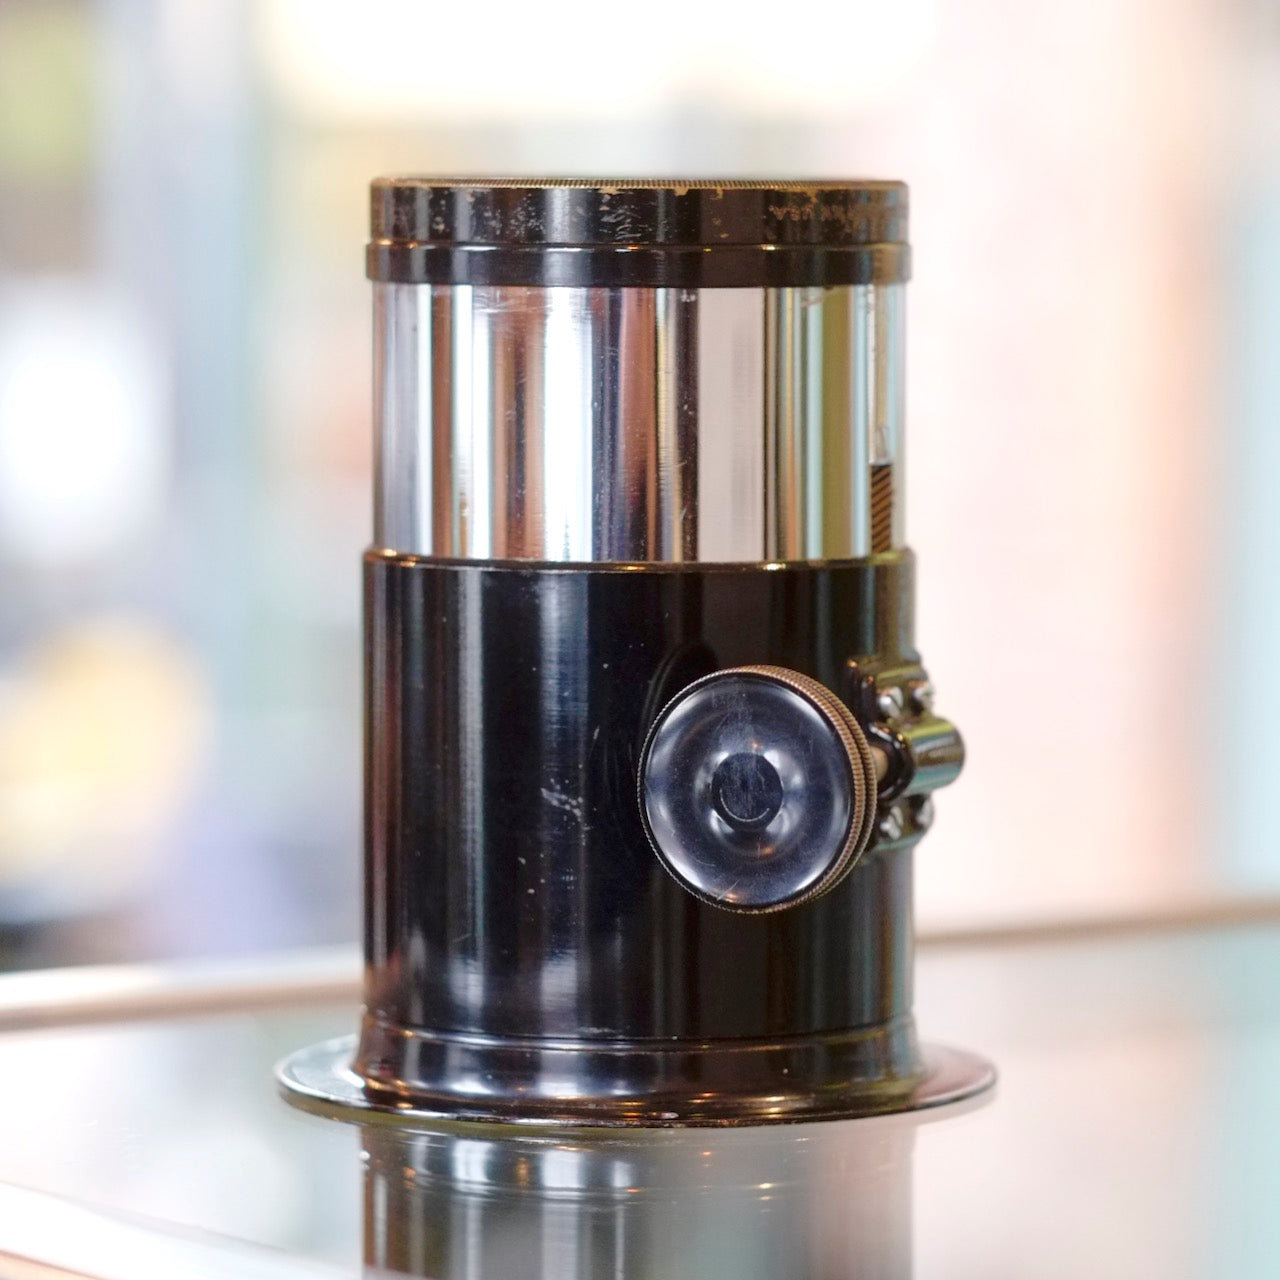 Bausch & Lomb 15 inch lens